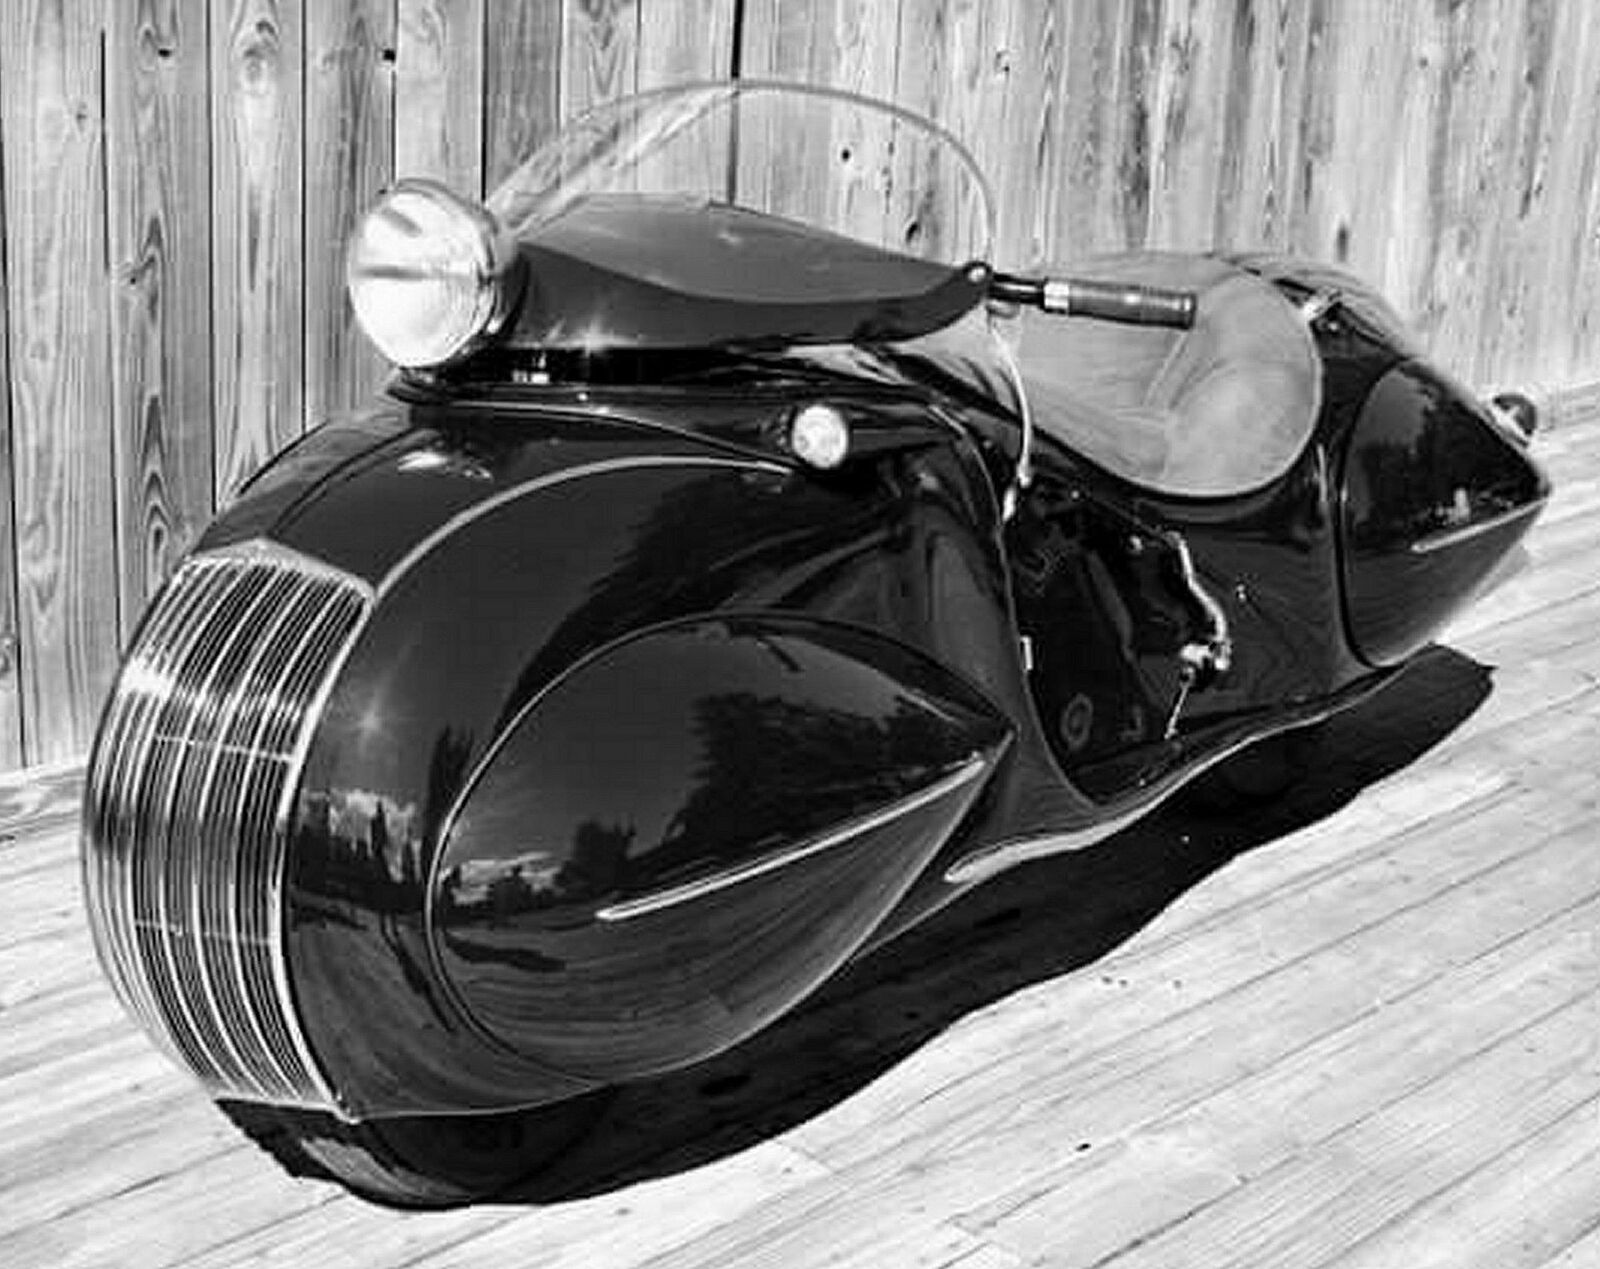 1936 HENDERSON Art Deco MOTORCYCLE PHOTO (200-H)